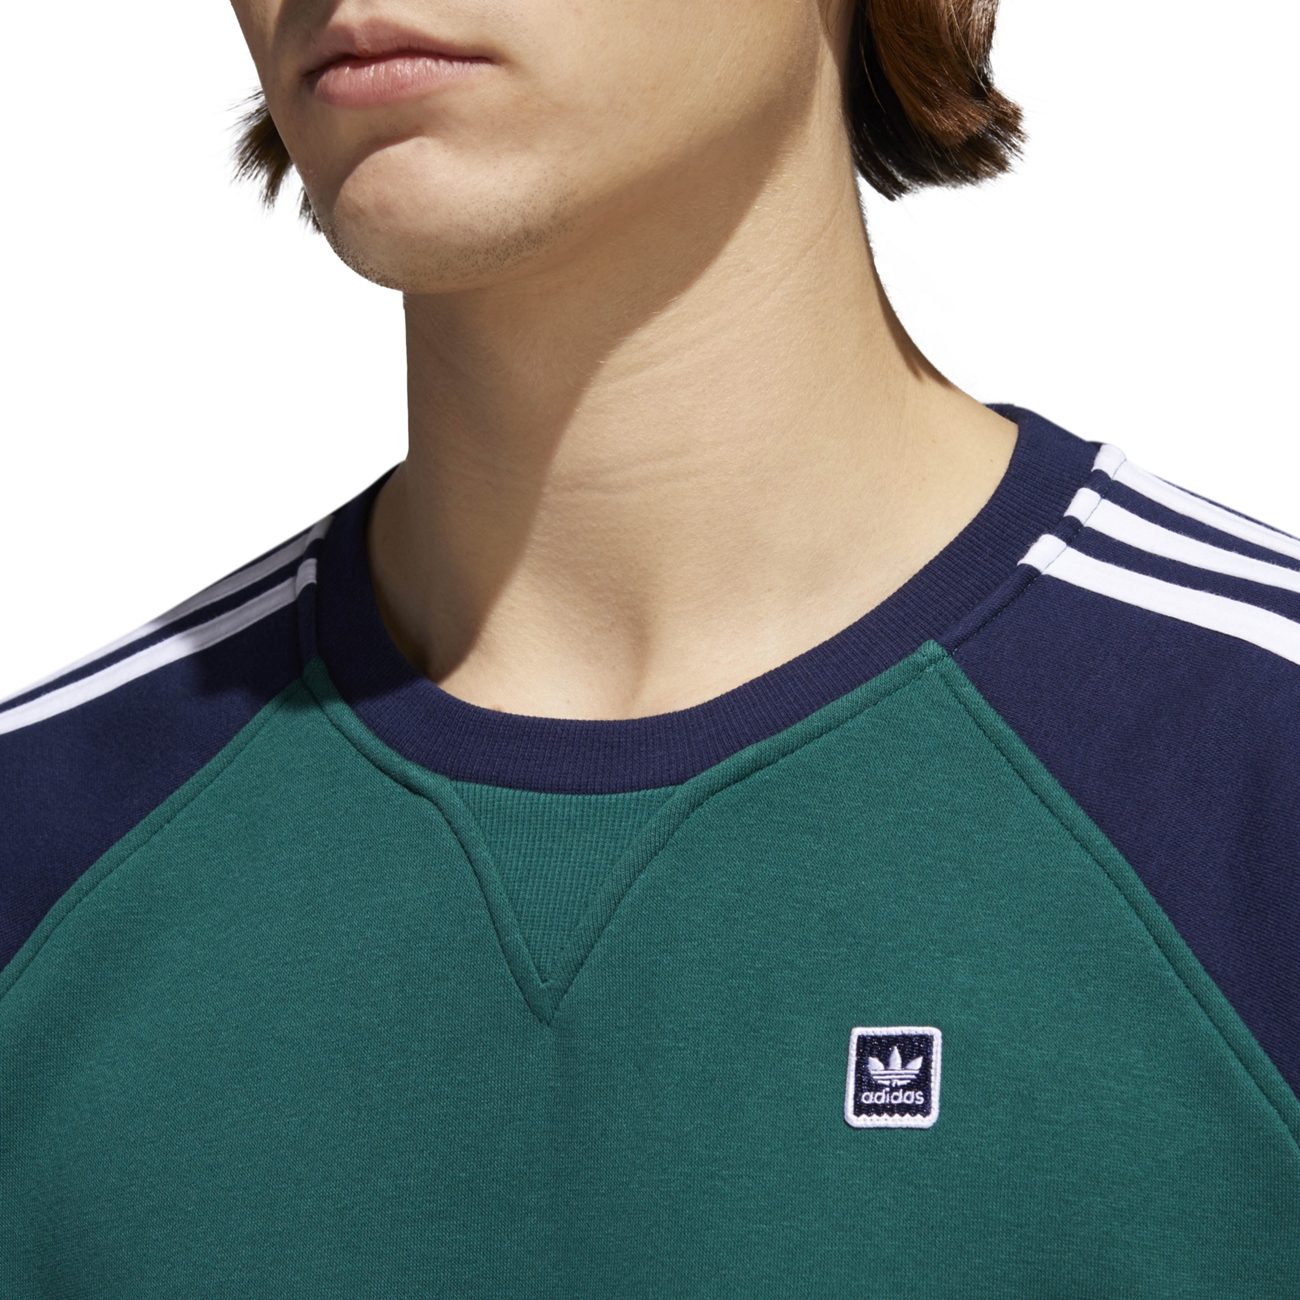 Adidas Originals Uniform Skaters Crew - manelsanchez.com